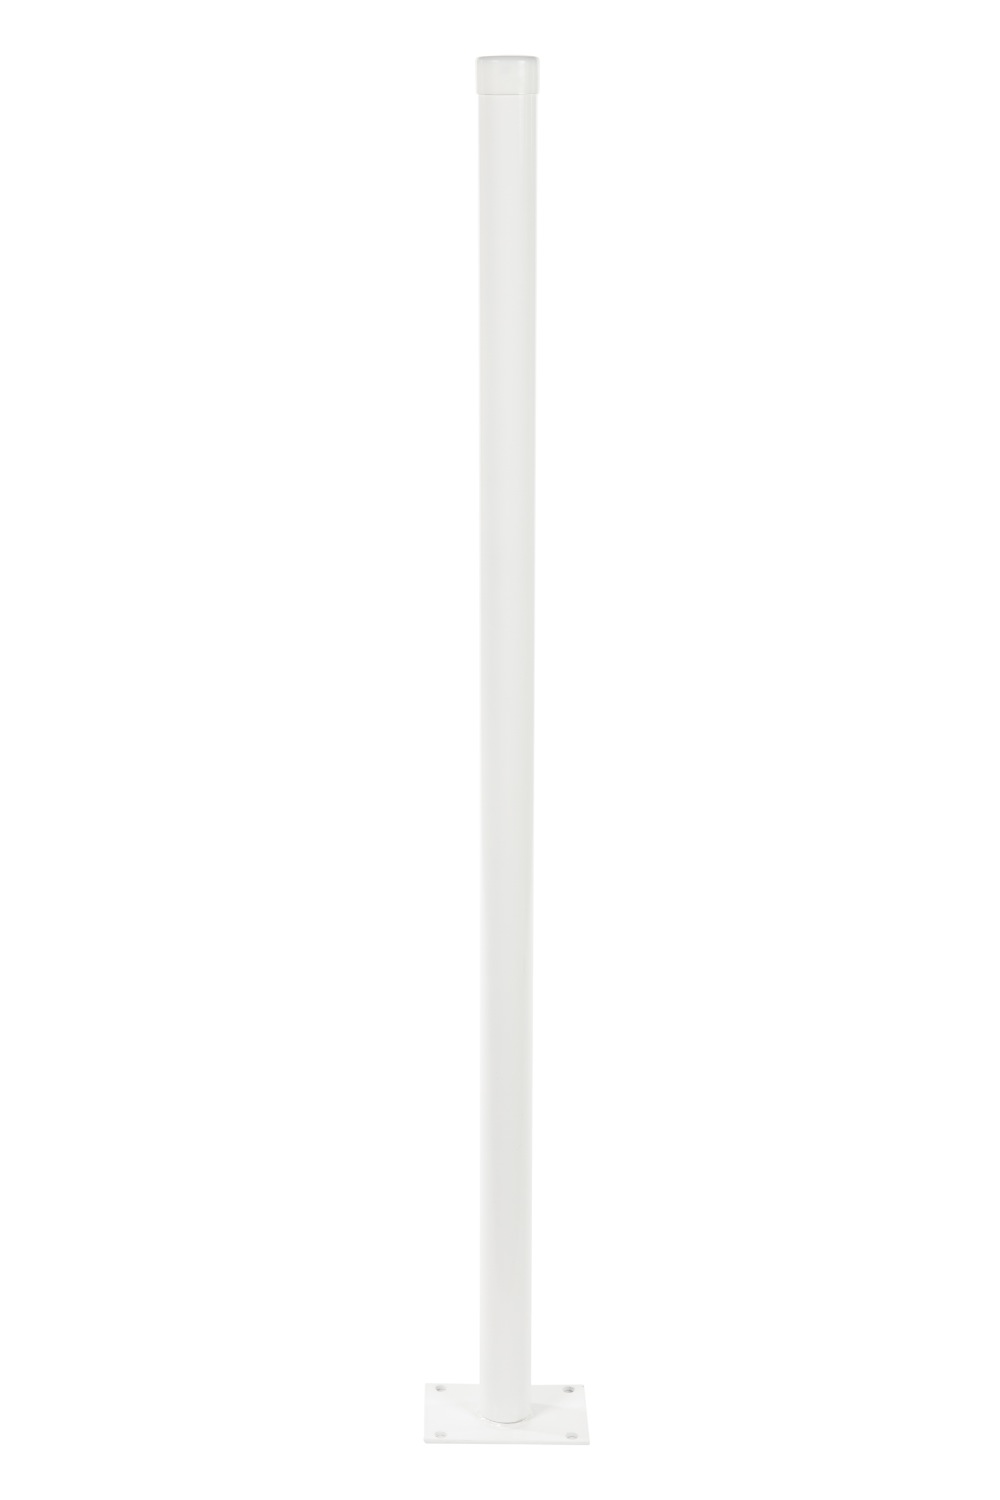 Poteau rond blanc ø 48mm - h. 1,70 m